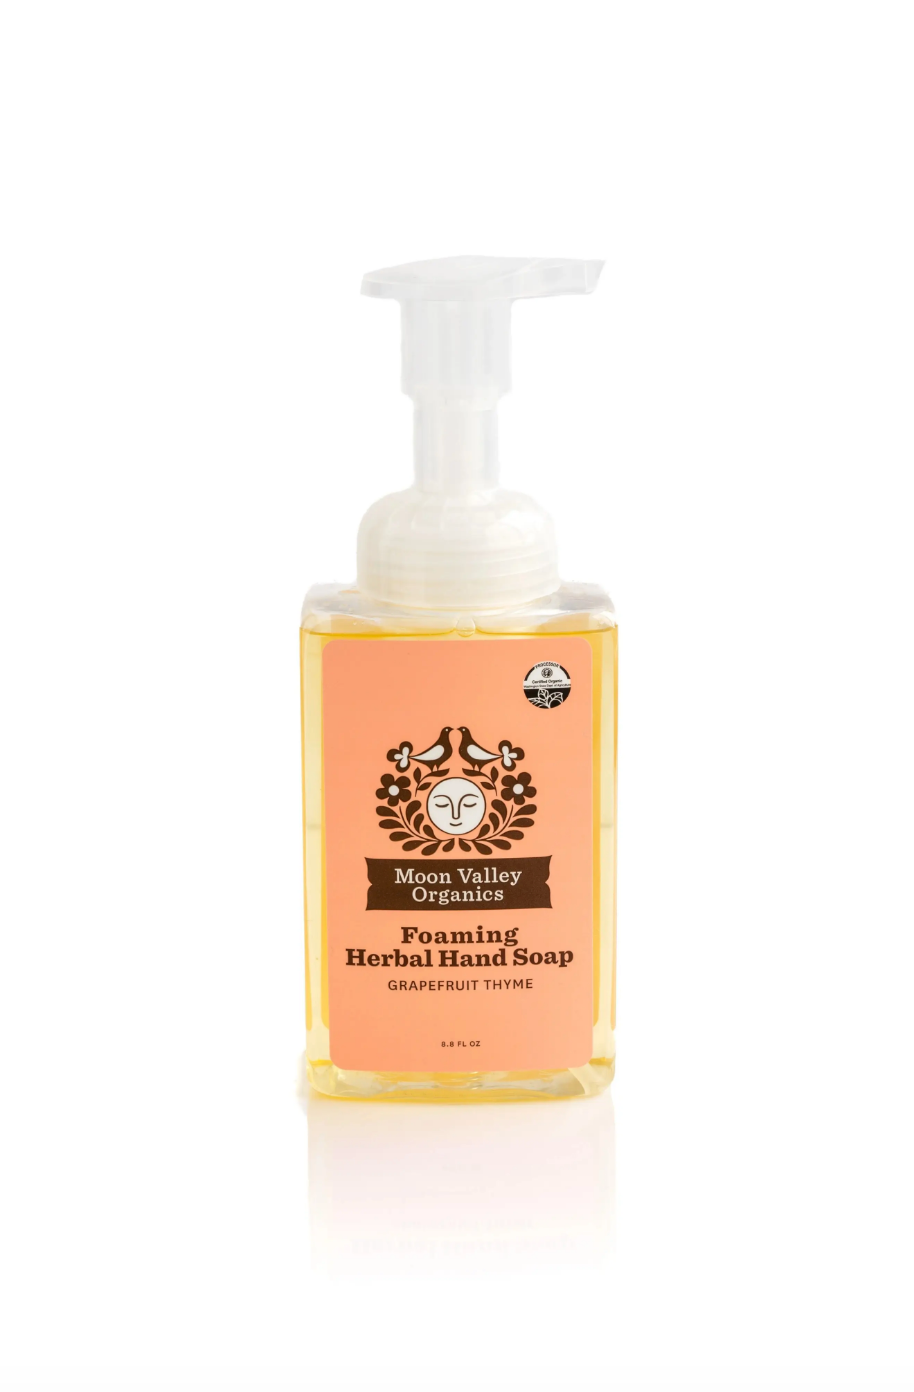 Grapefruit Thyme Foaming Herbal Hand Soap